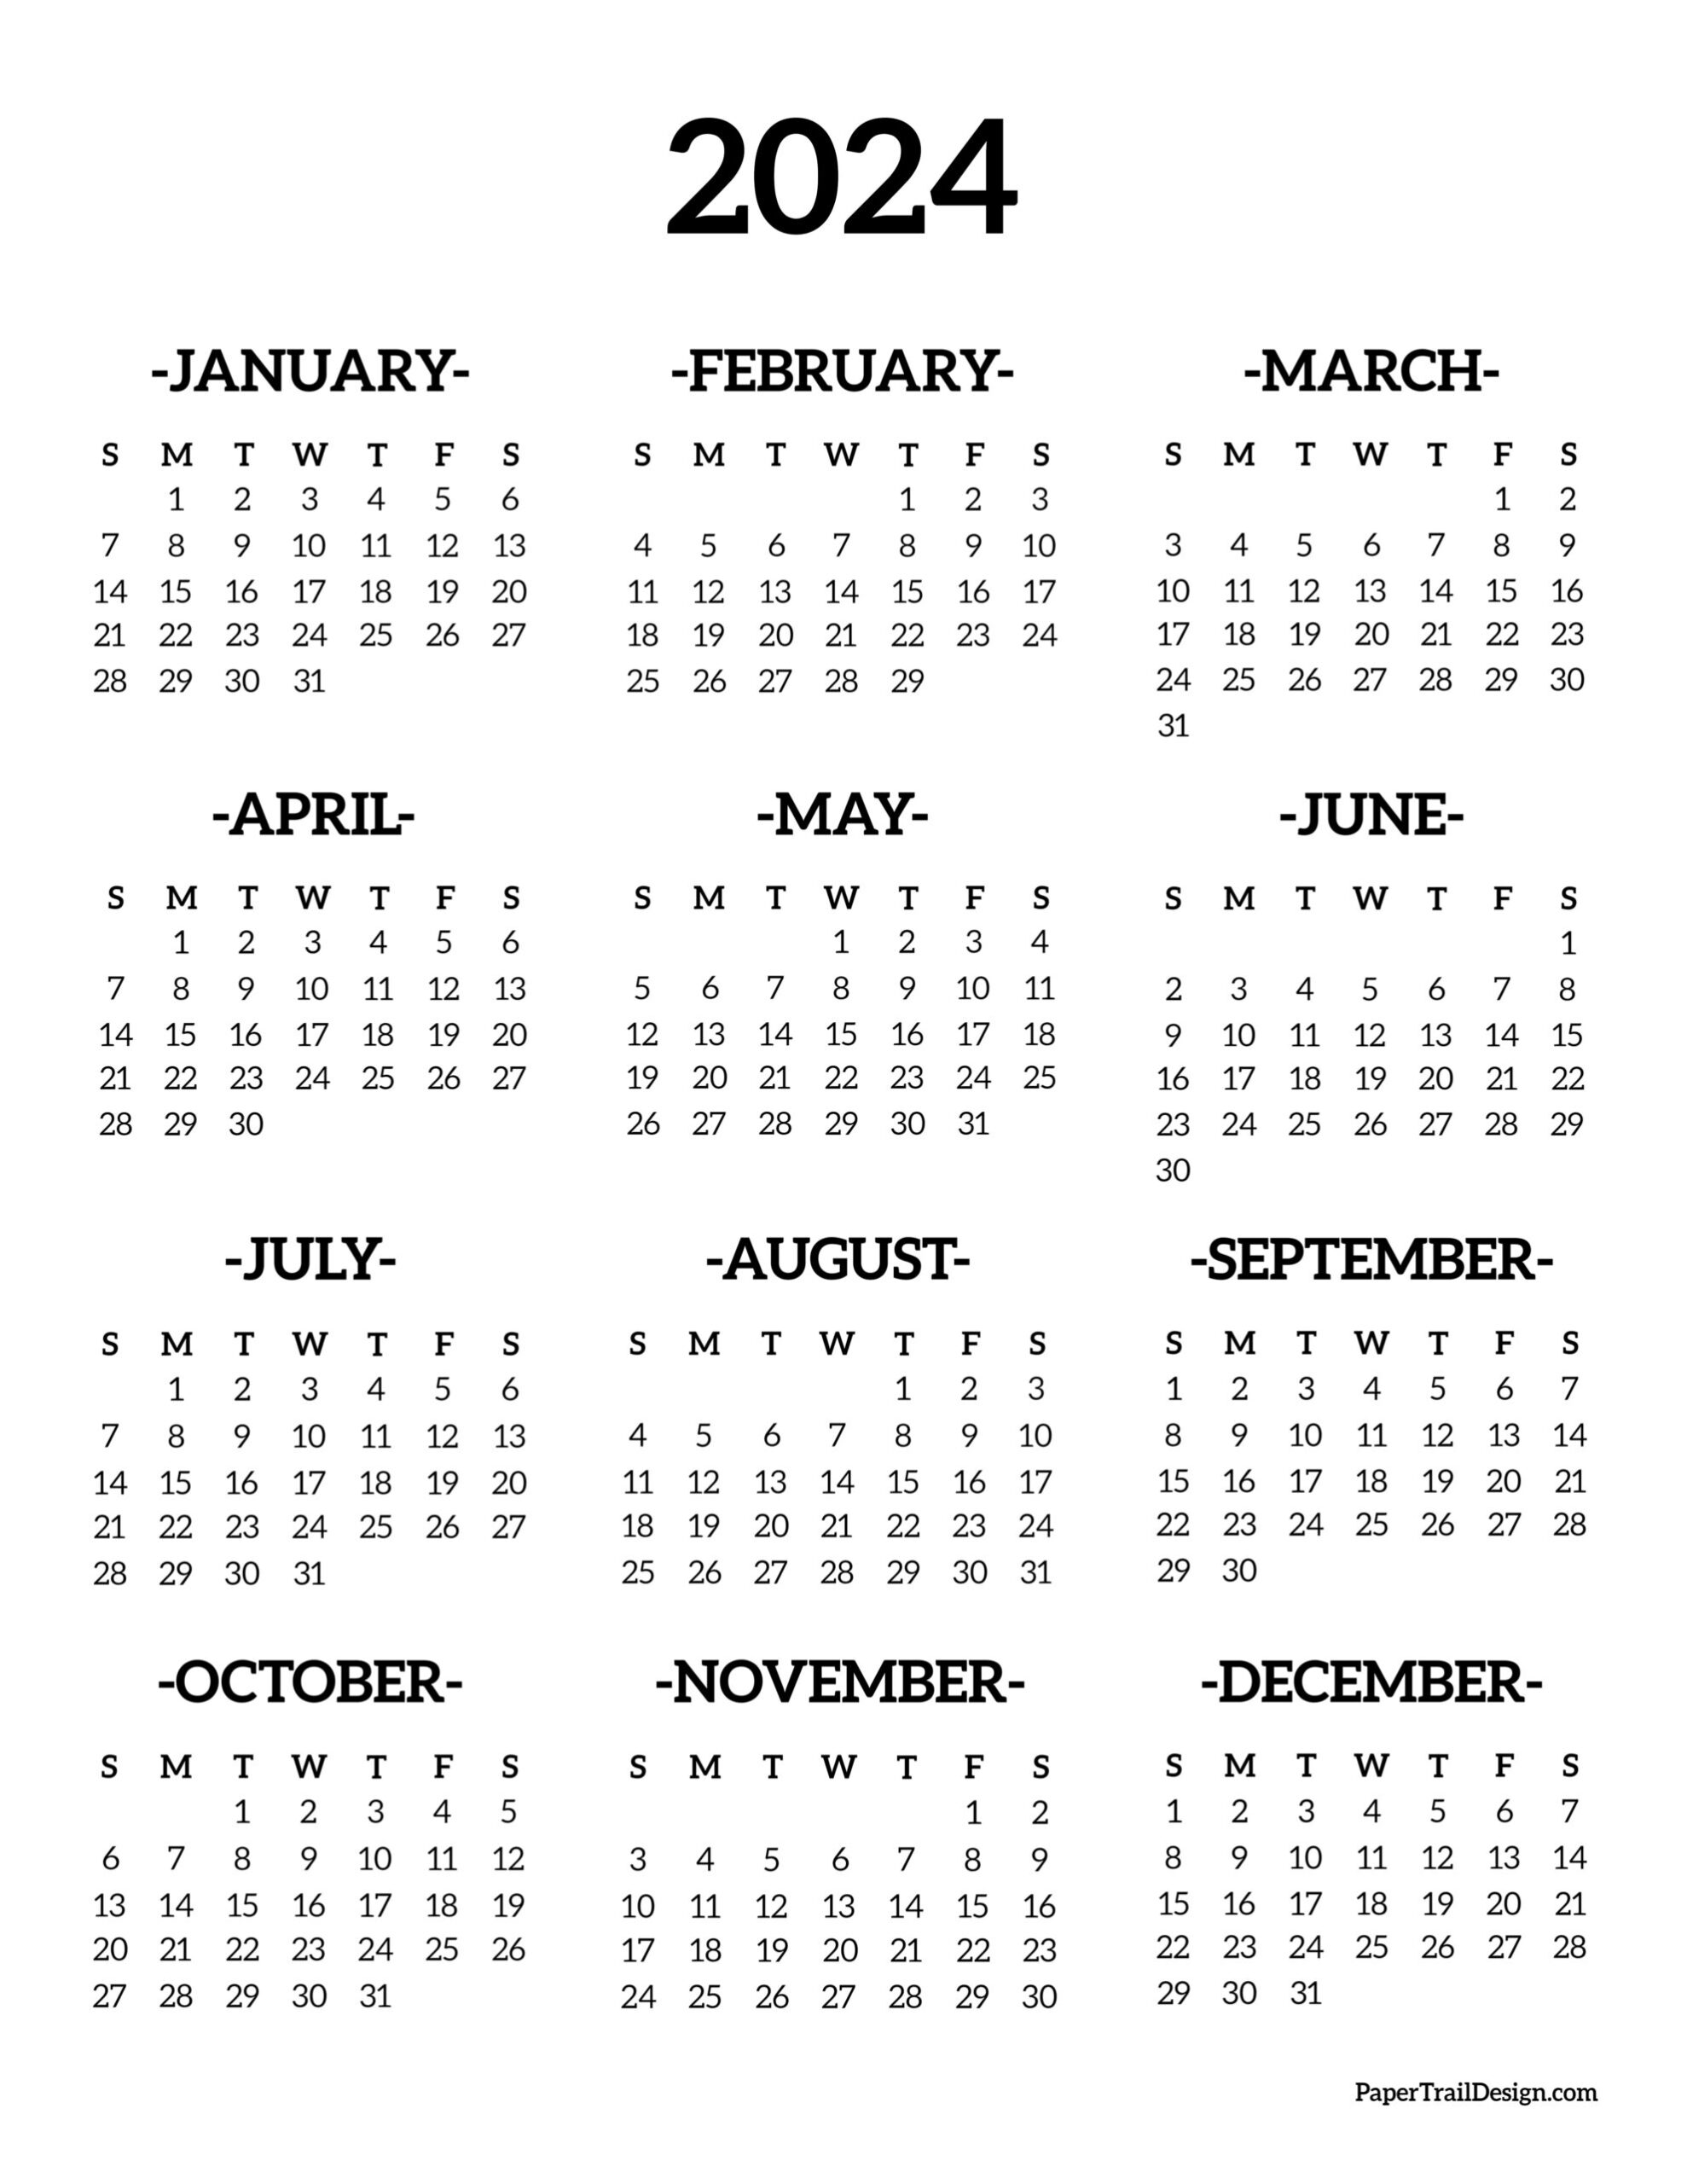 Calendar 2024 Printable One Page - Paper Trail Design for 2024 2024 Calendar Printable